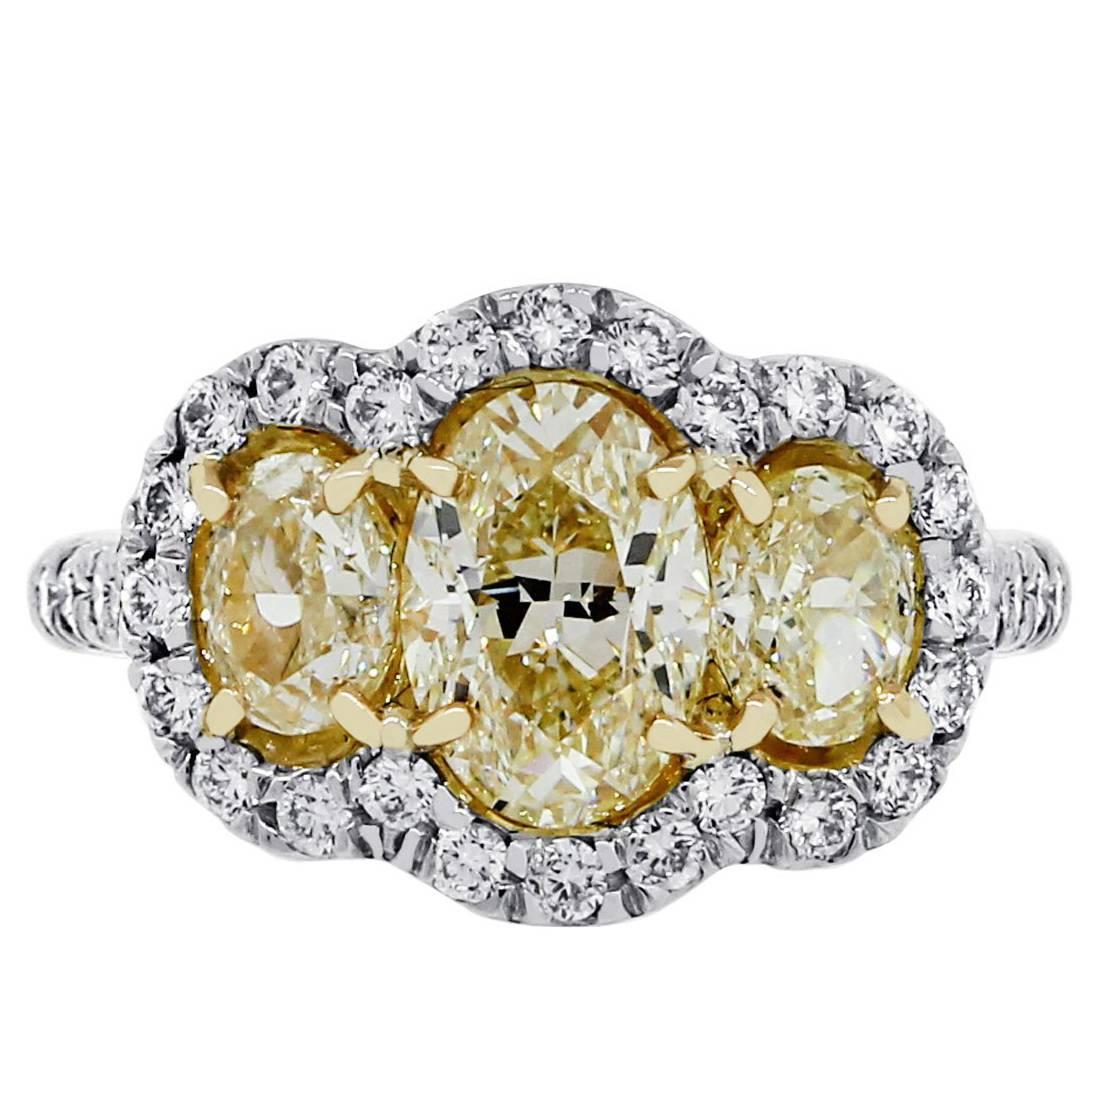 Fancy Yellow Oval Diamond Ring